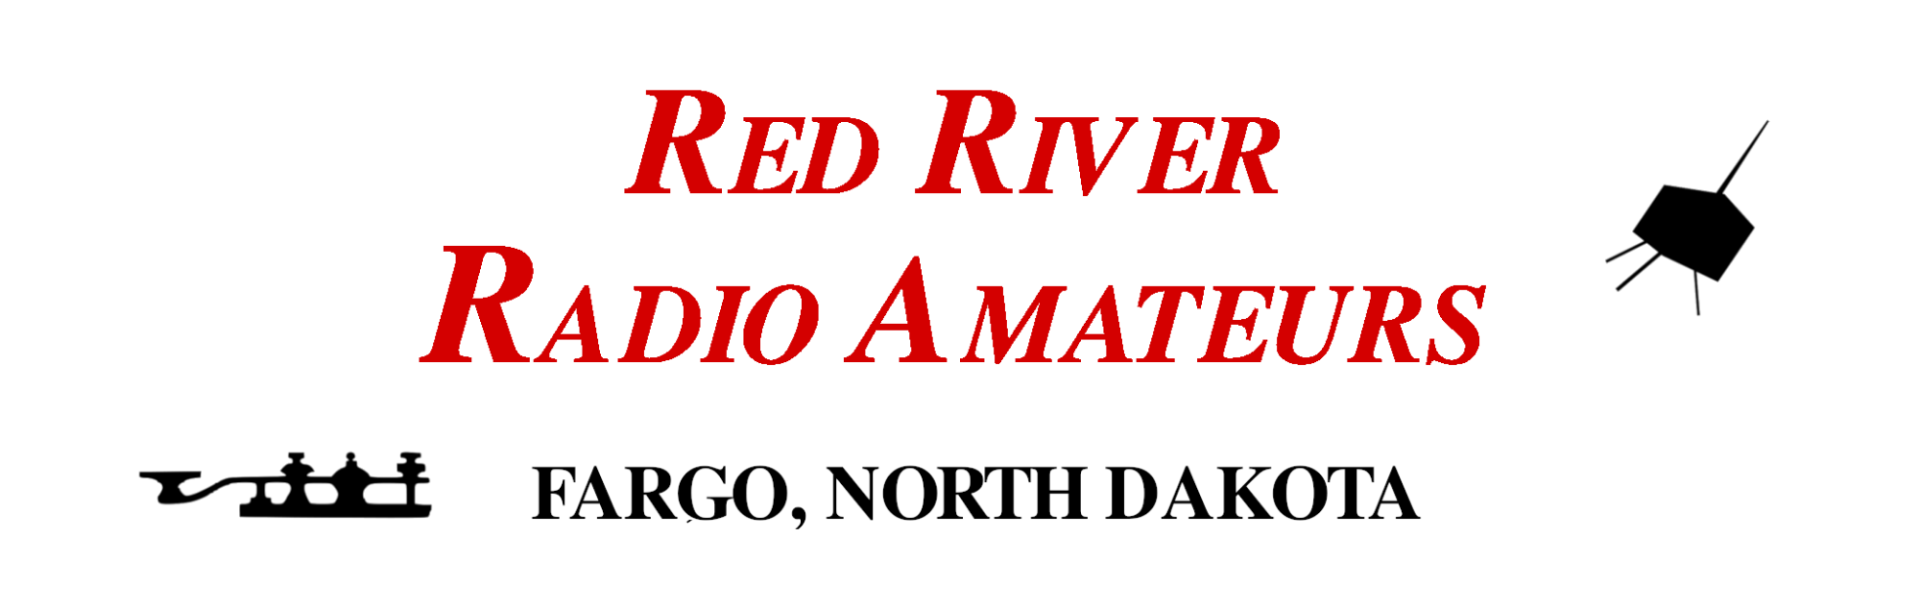 RRRA Hamfest and ARRL Dakota Division Convention pic